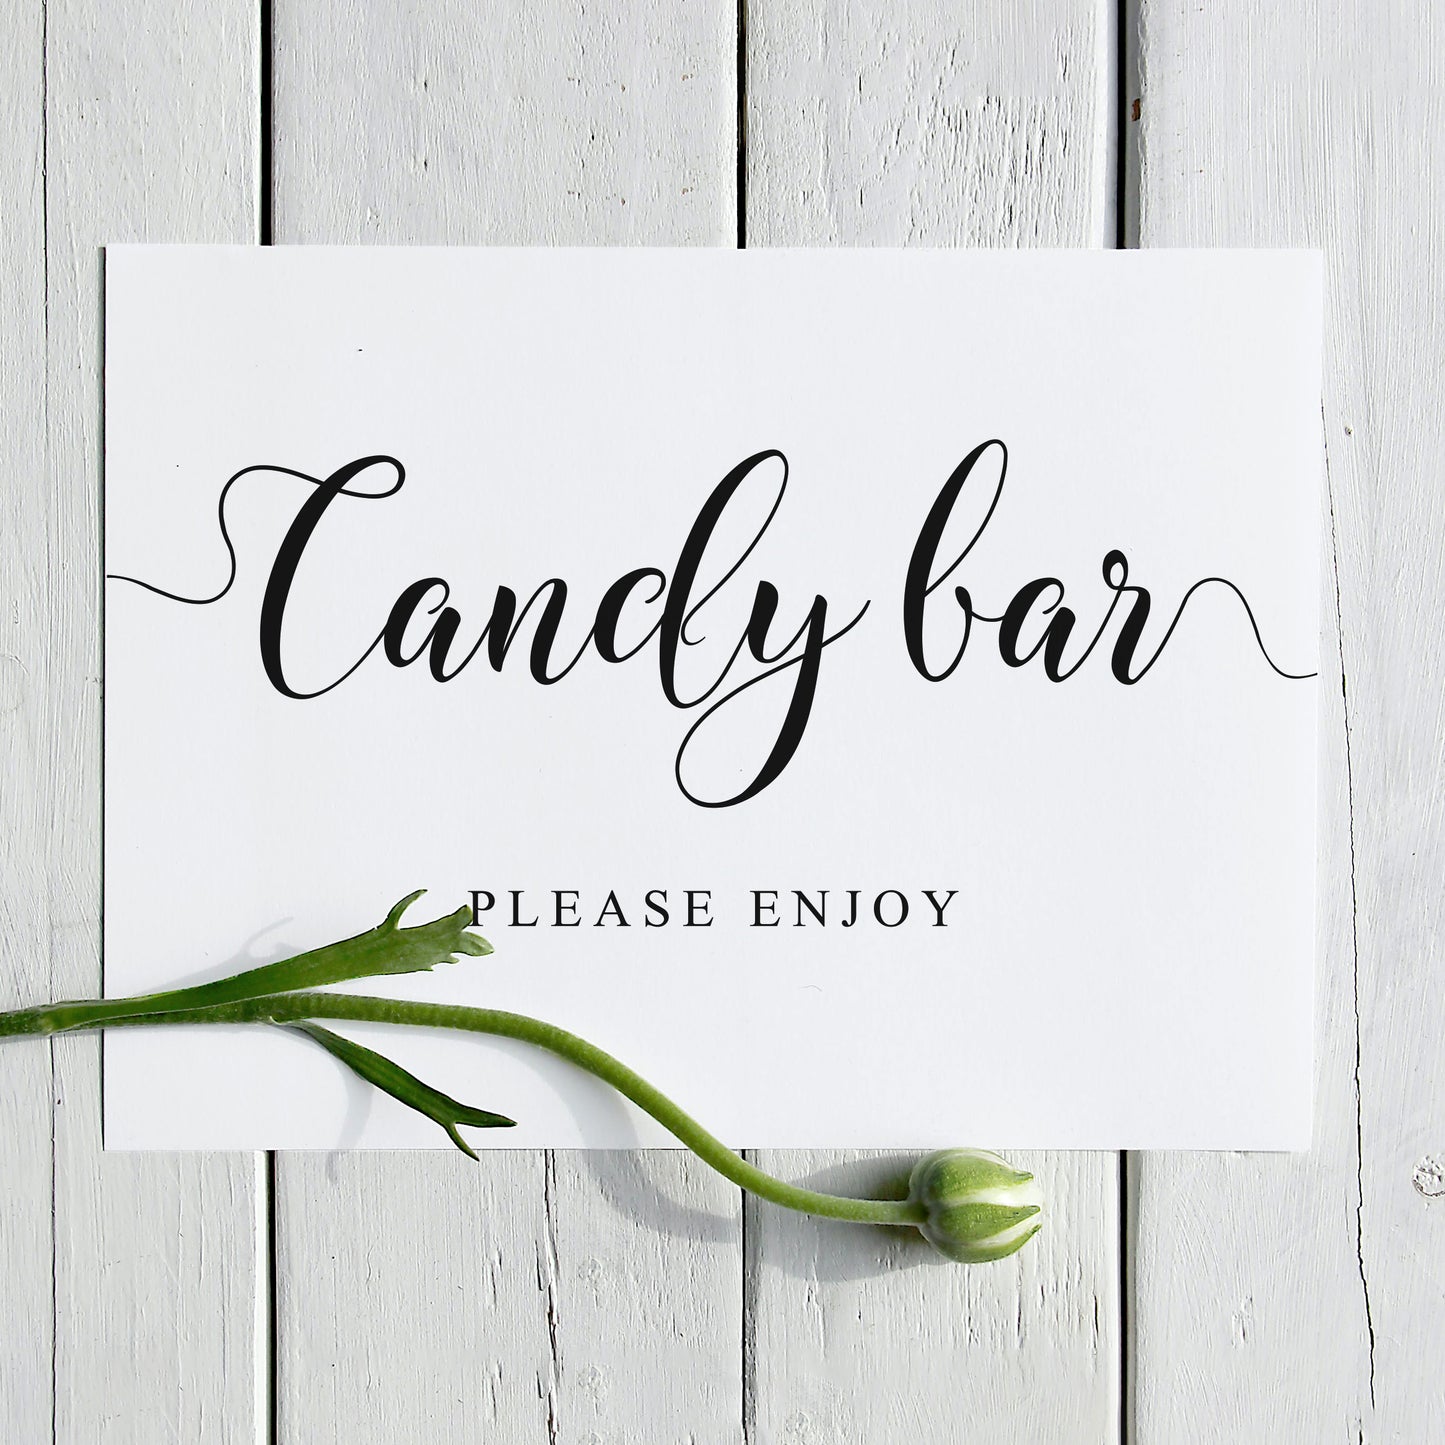 Candy Bar Sign - Digital Download